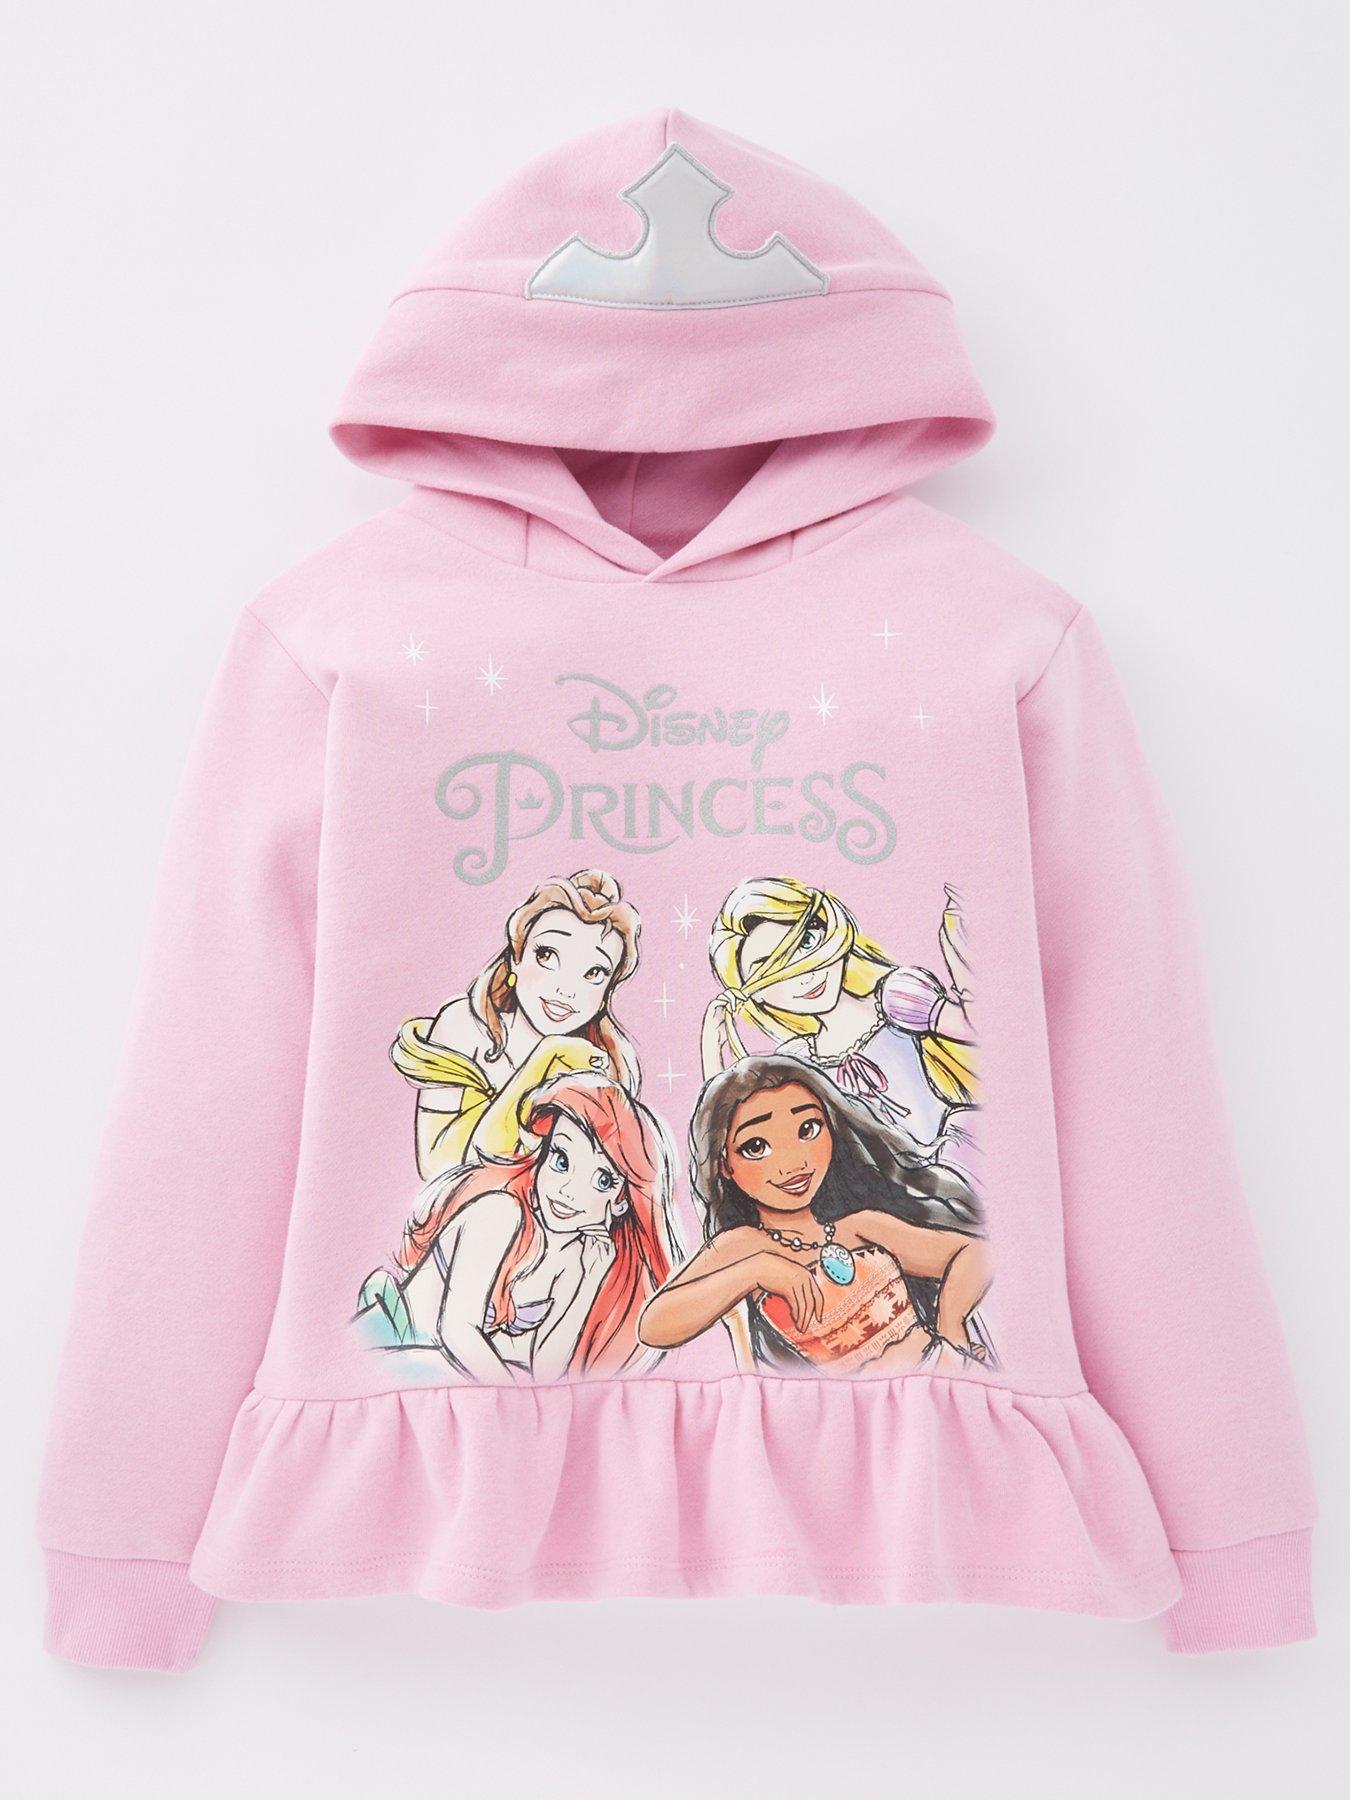 Toddler Girls' Disney Princess Fleece Pullover Sweatshirt - Pink 2T